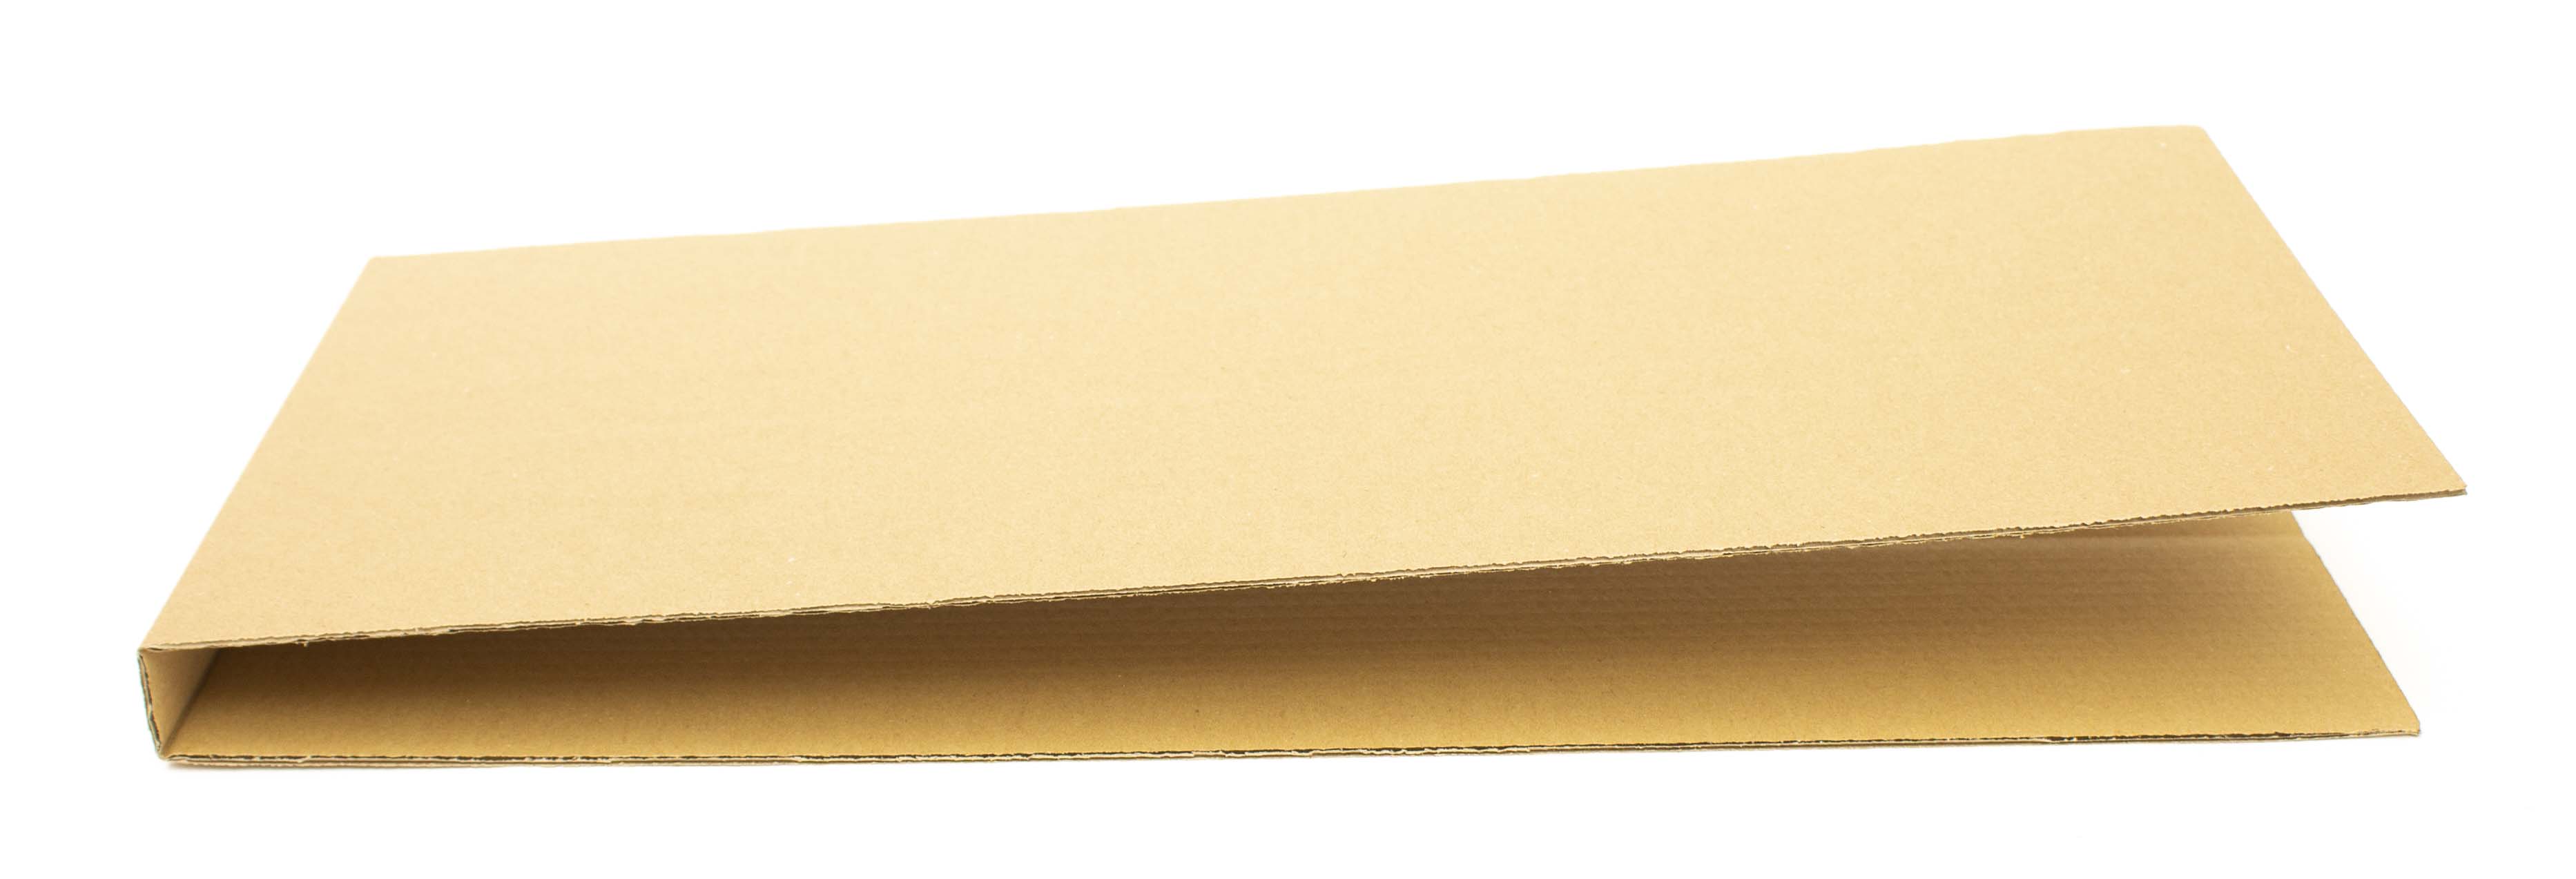 Karton Kantenschutz aus Pappe